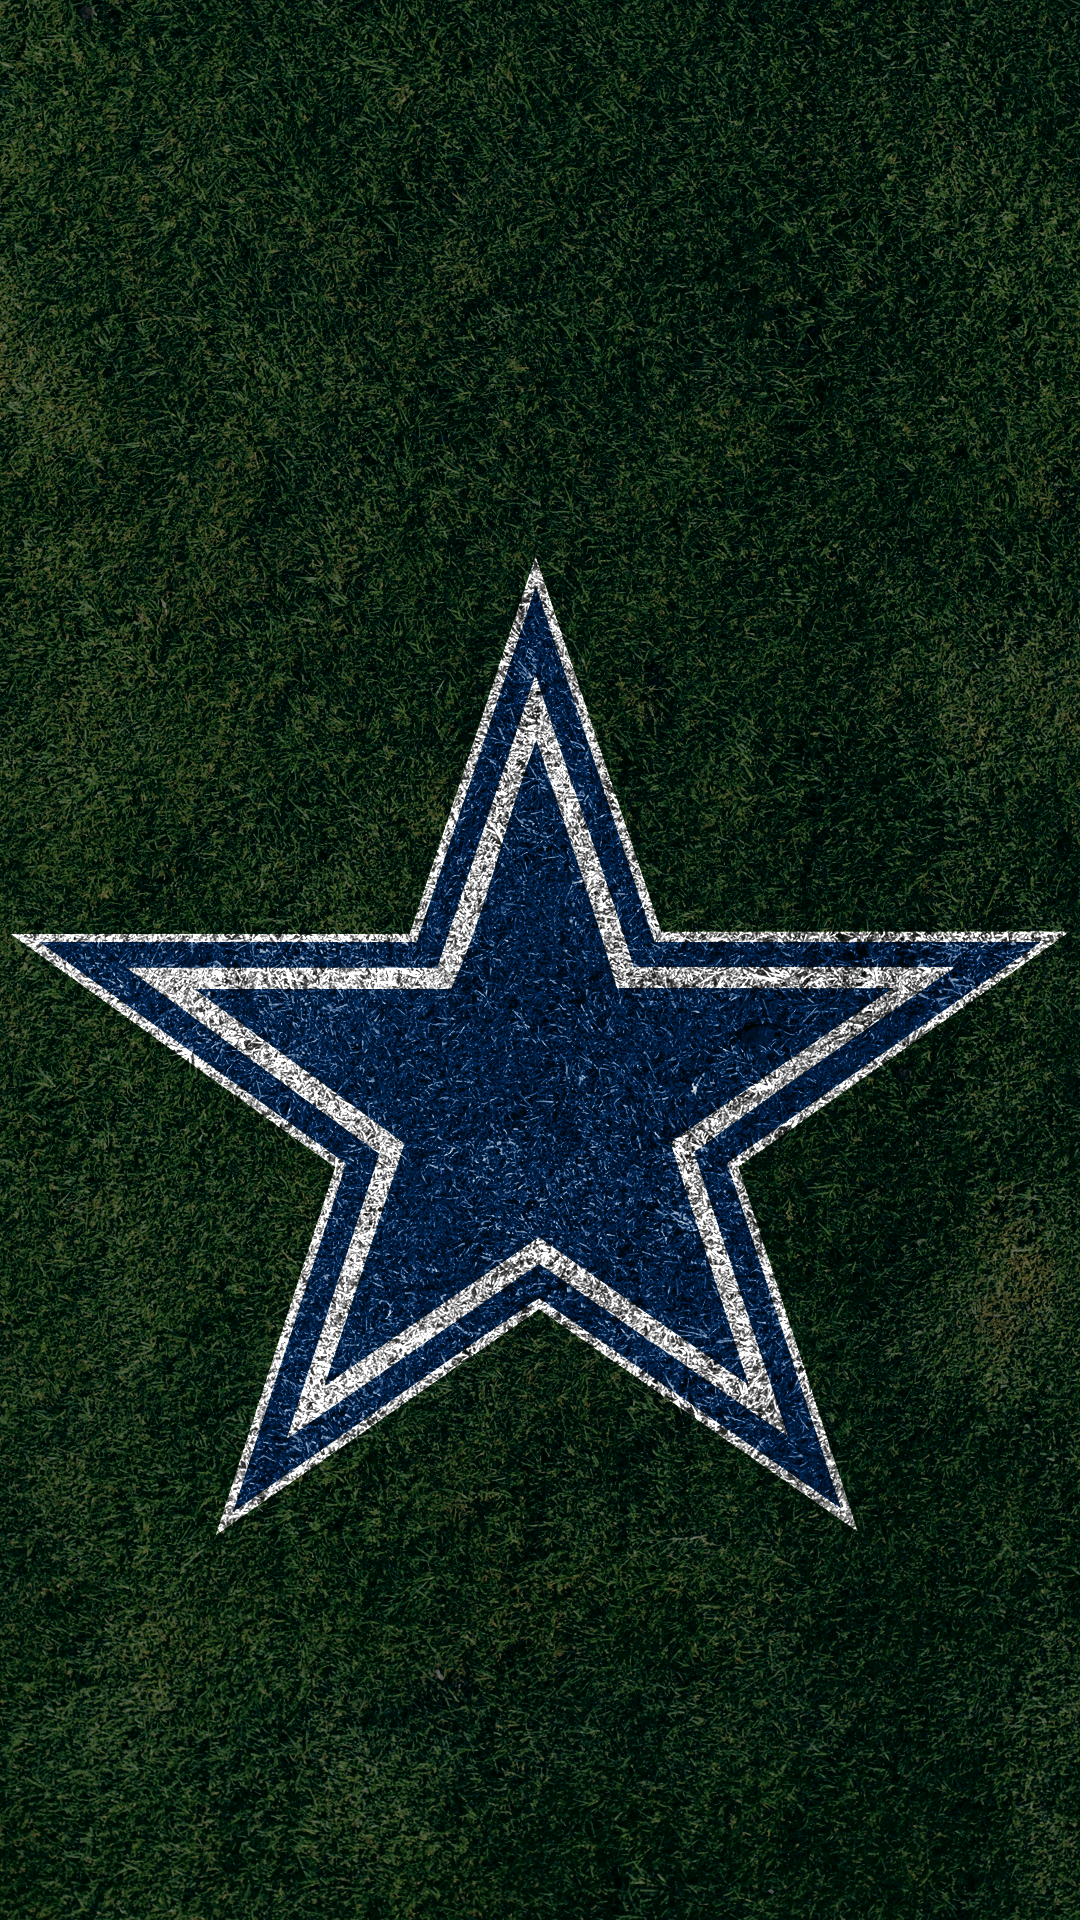 Dallas Cowboys Mobile Logo Wallpaper. Dallas cowboys wallpaper, Dallas cowboys wallpaper iphone, Dallas cowboys football wallpaper